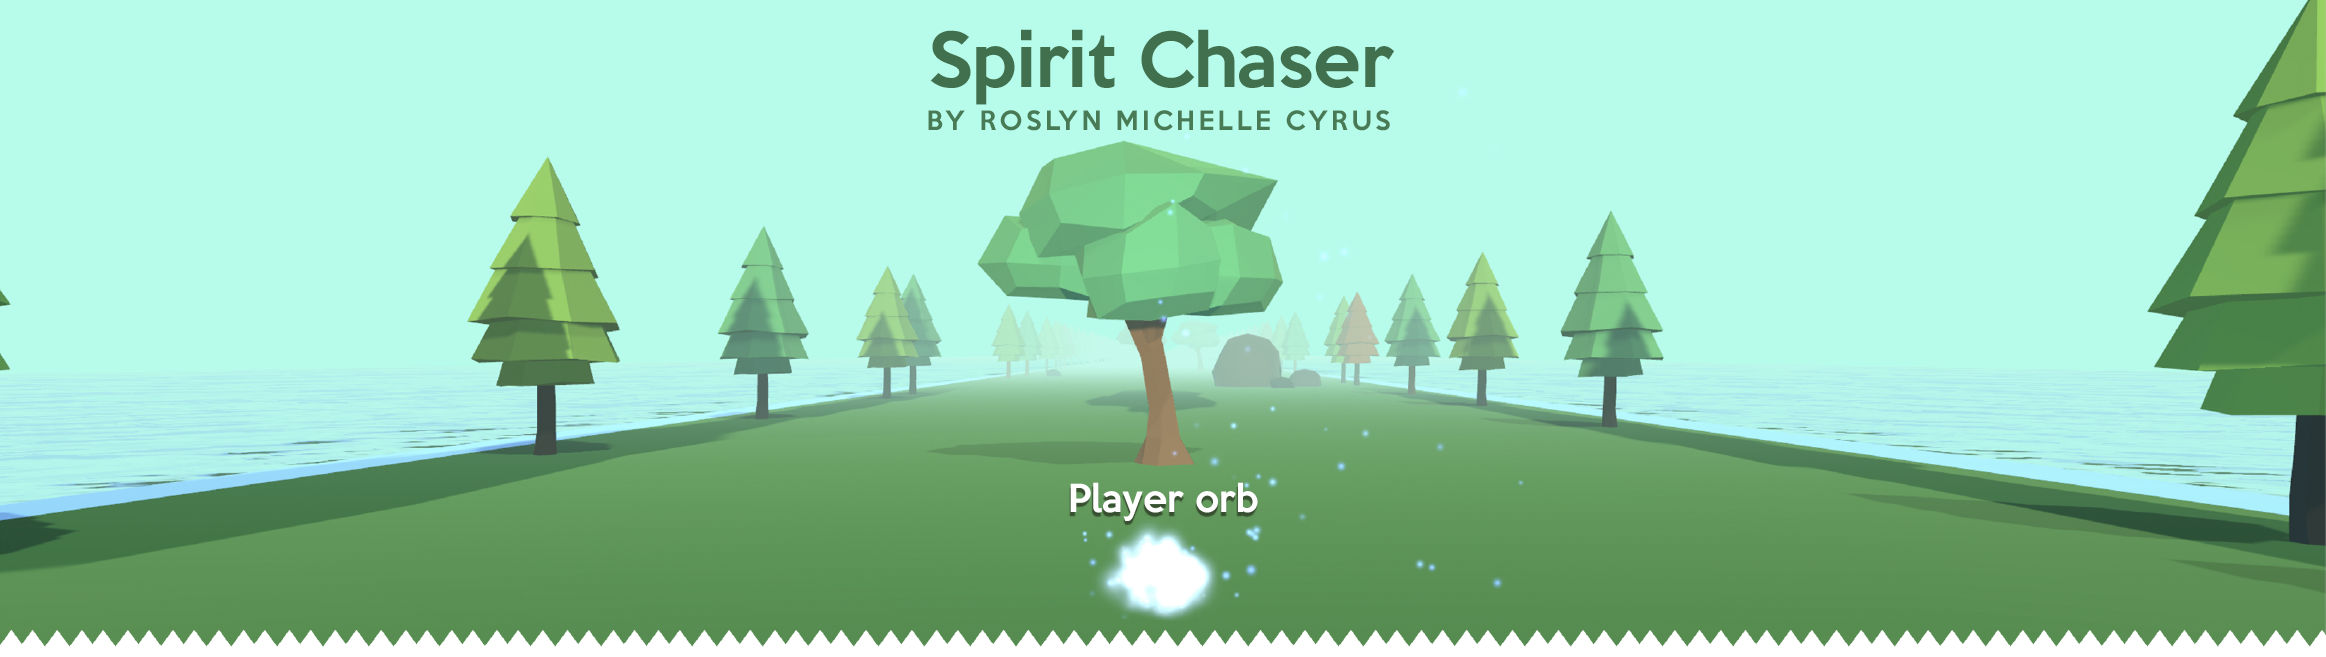 Spirit Chaser One Page Design